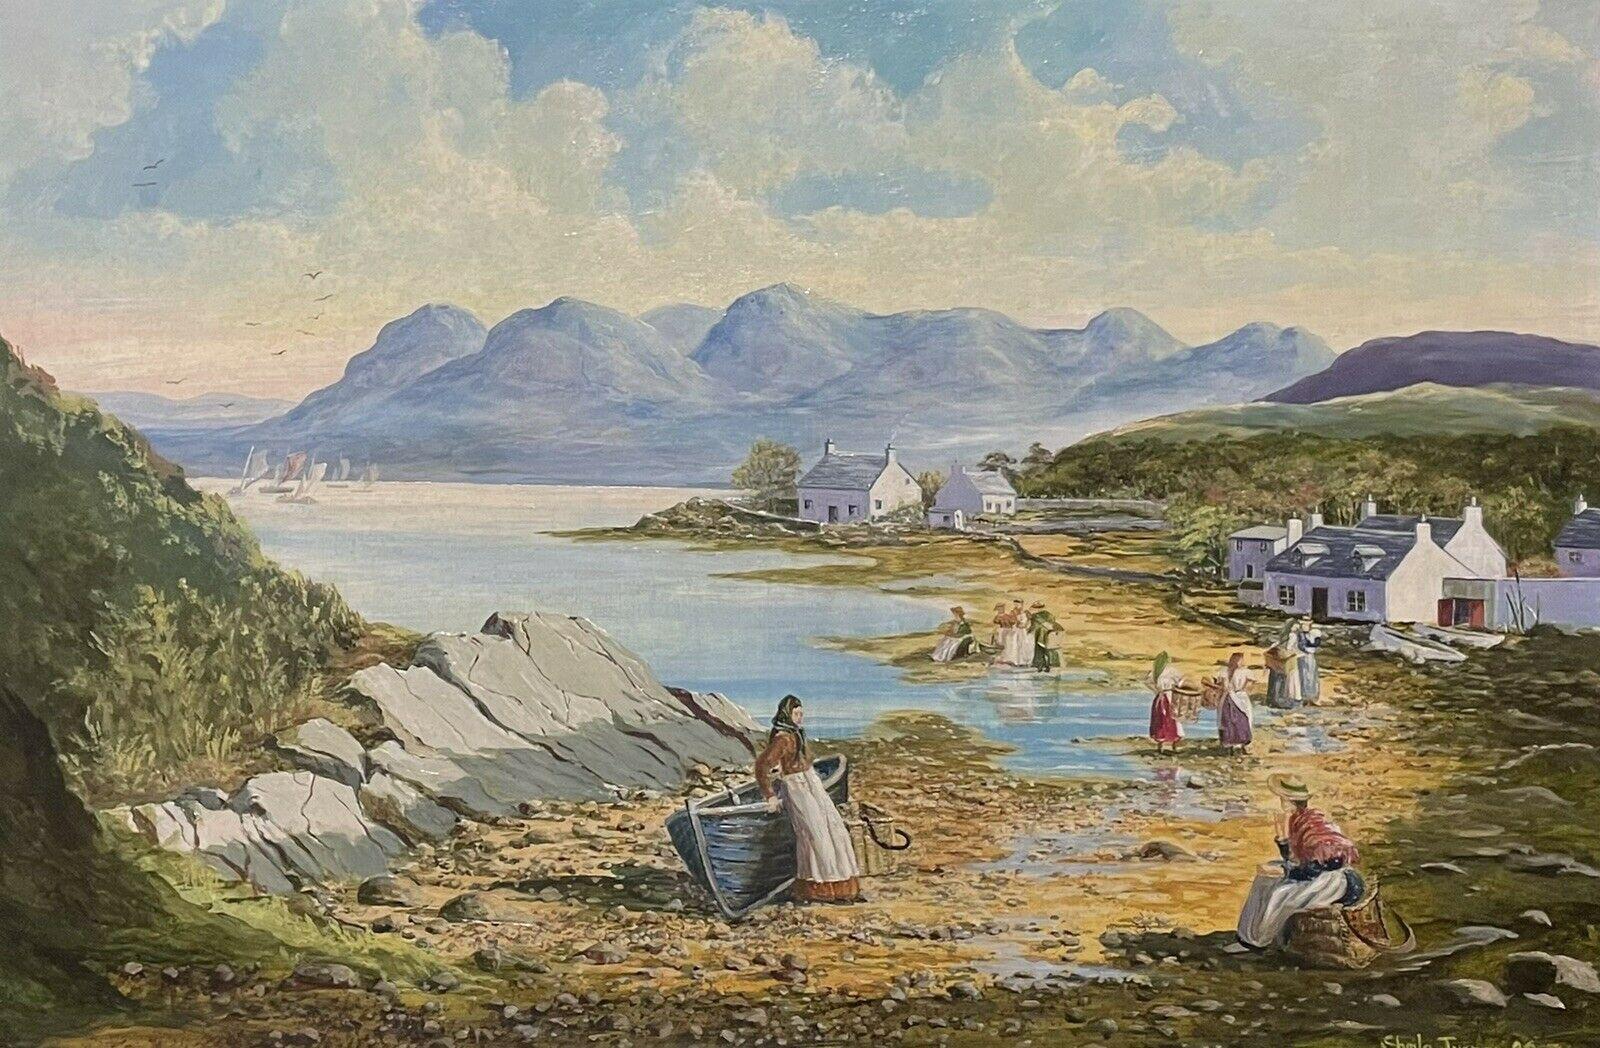 Sheila Turner Figurative Painting - Scottish Coastal Seascape Fishing Village Fisherfolk on the Shore, Large Oil